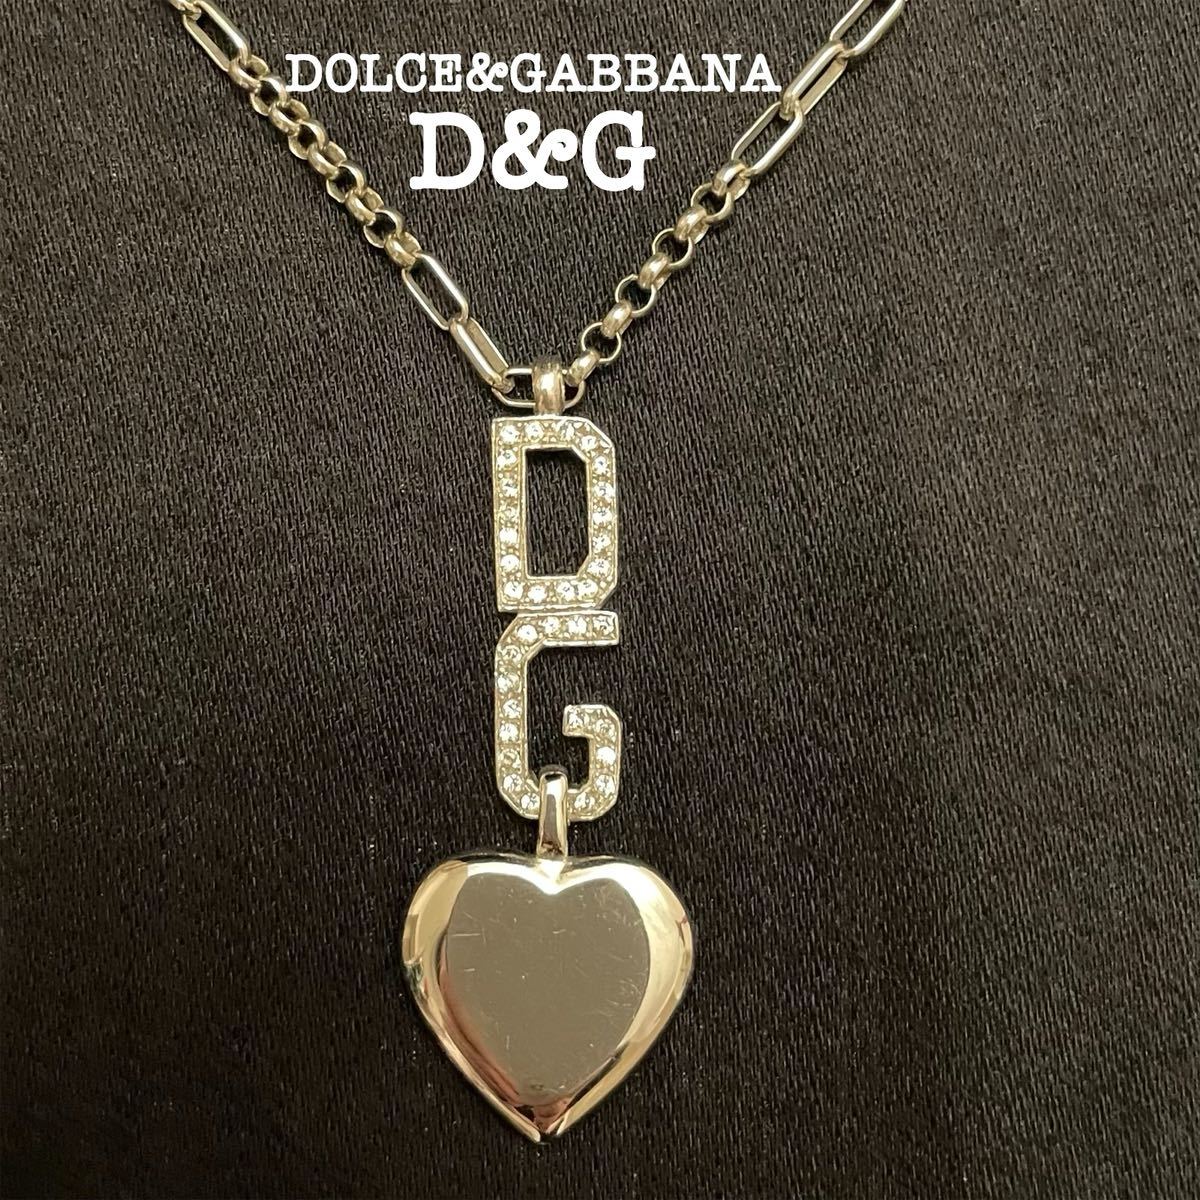 DOLCE&GABBANA D&G ネックレス ペンダント ハート ロゴ